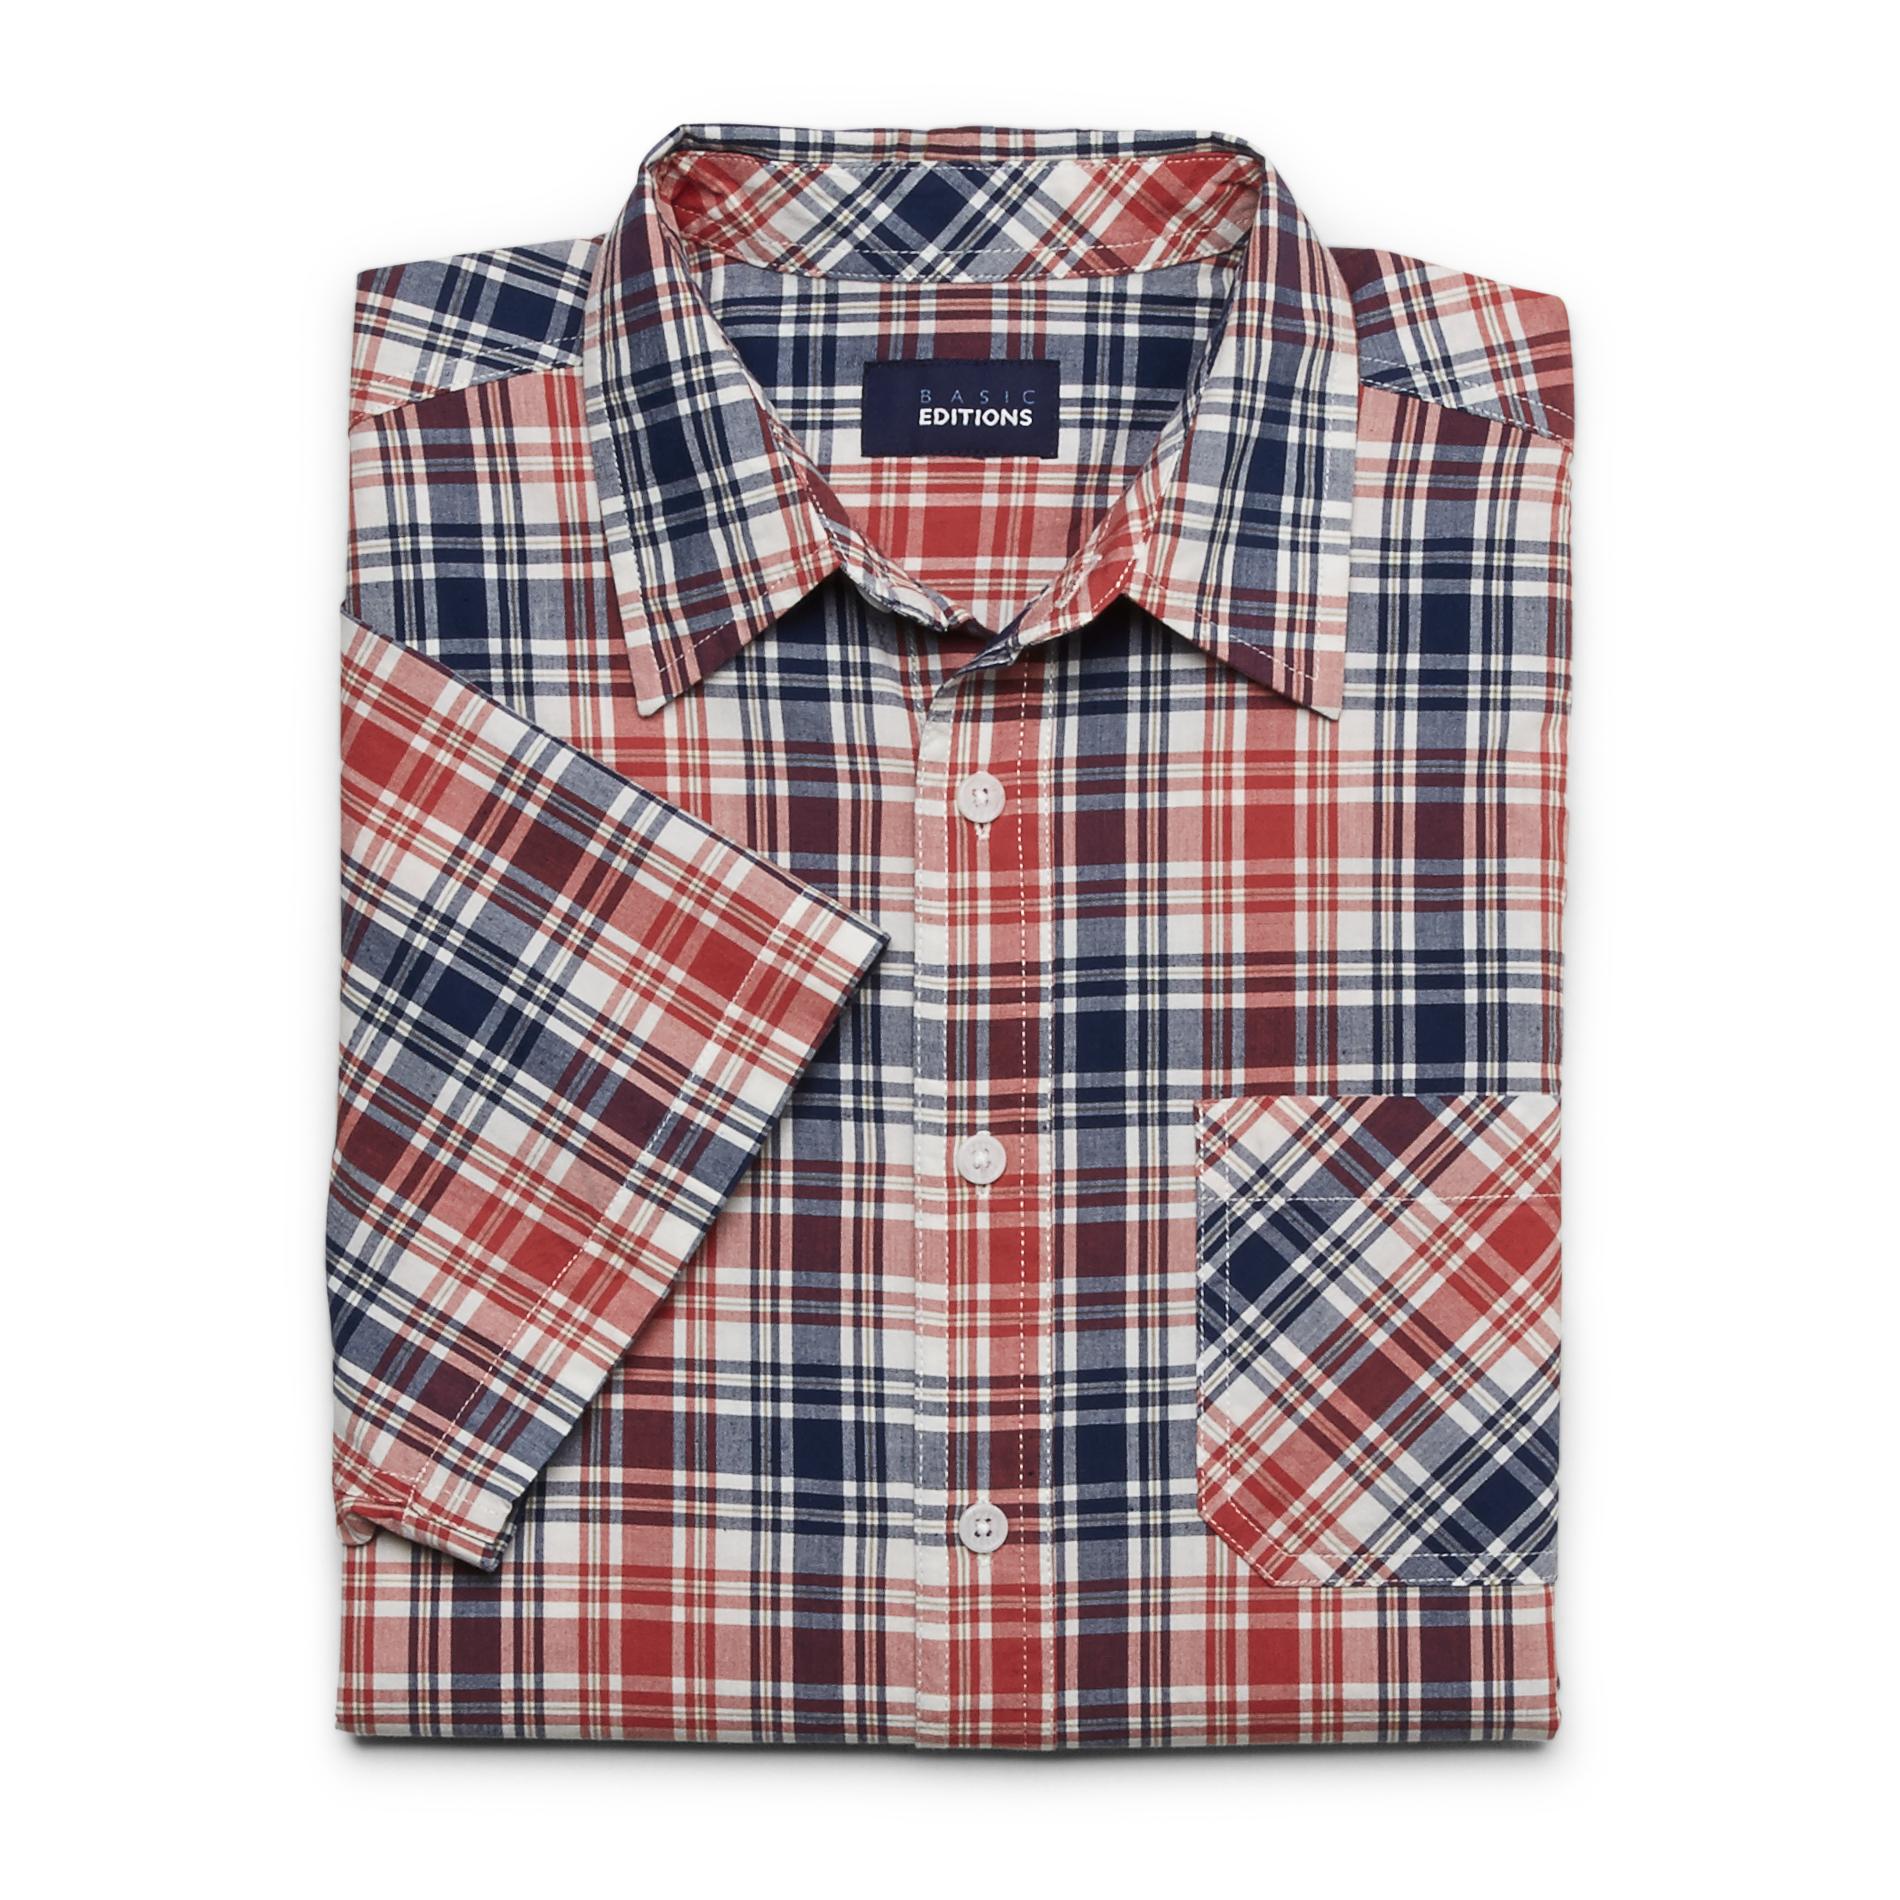 Basic Editions Men's Short-Sleeve Shirt - Plaid